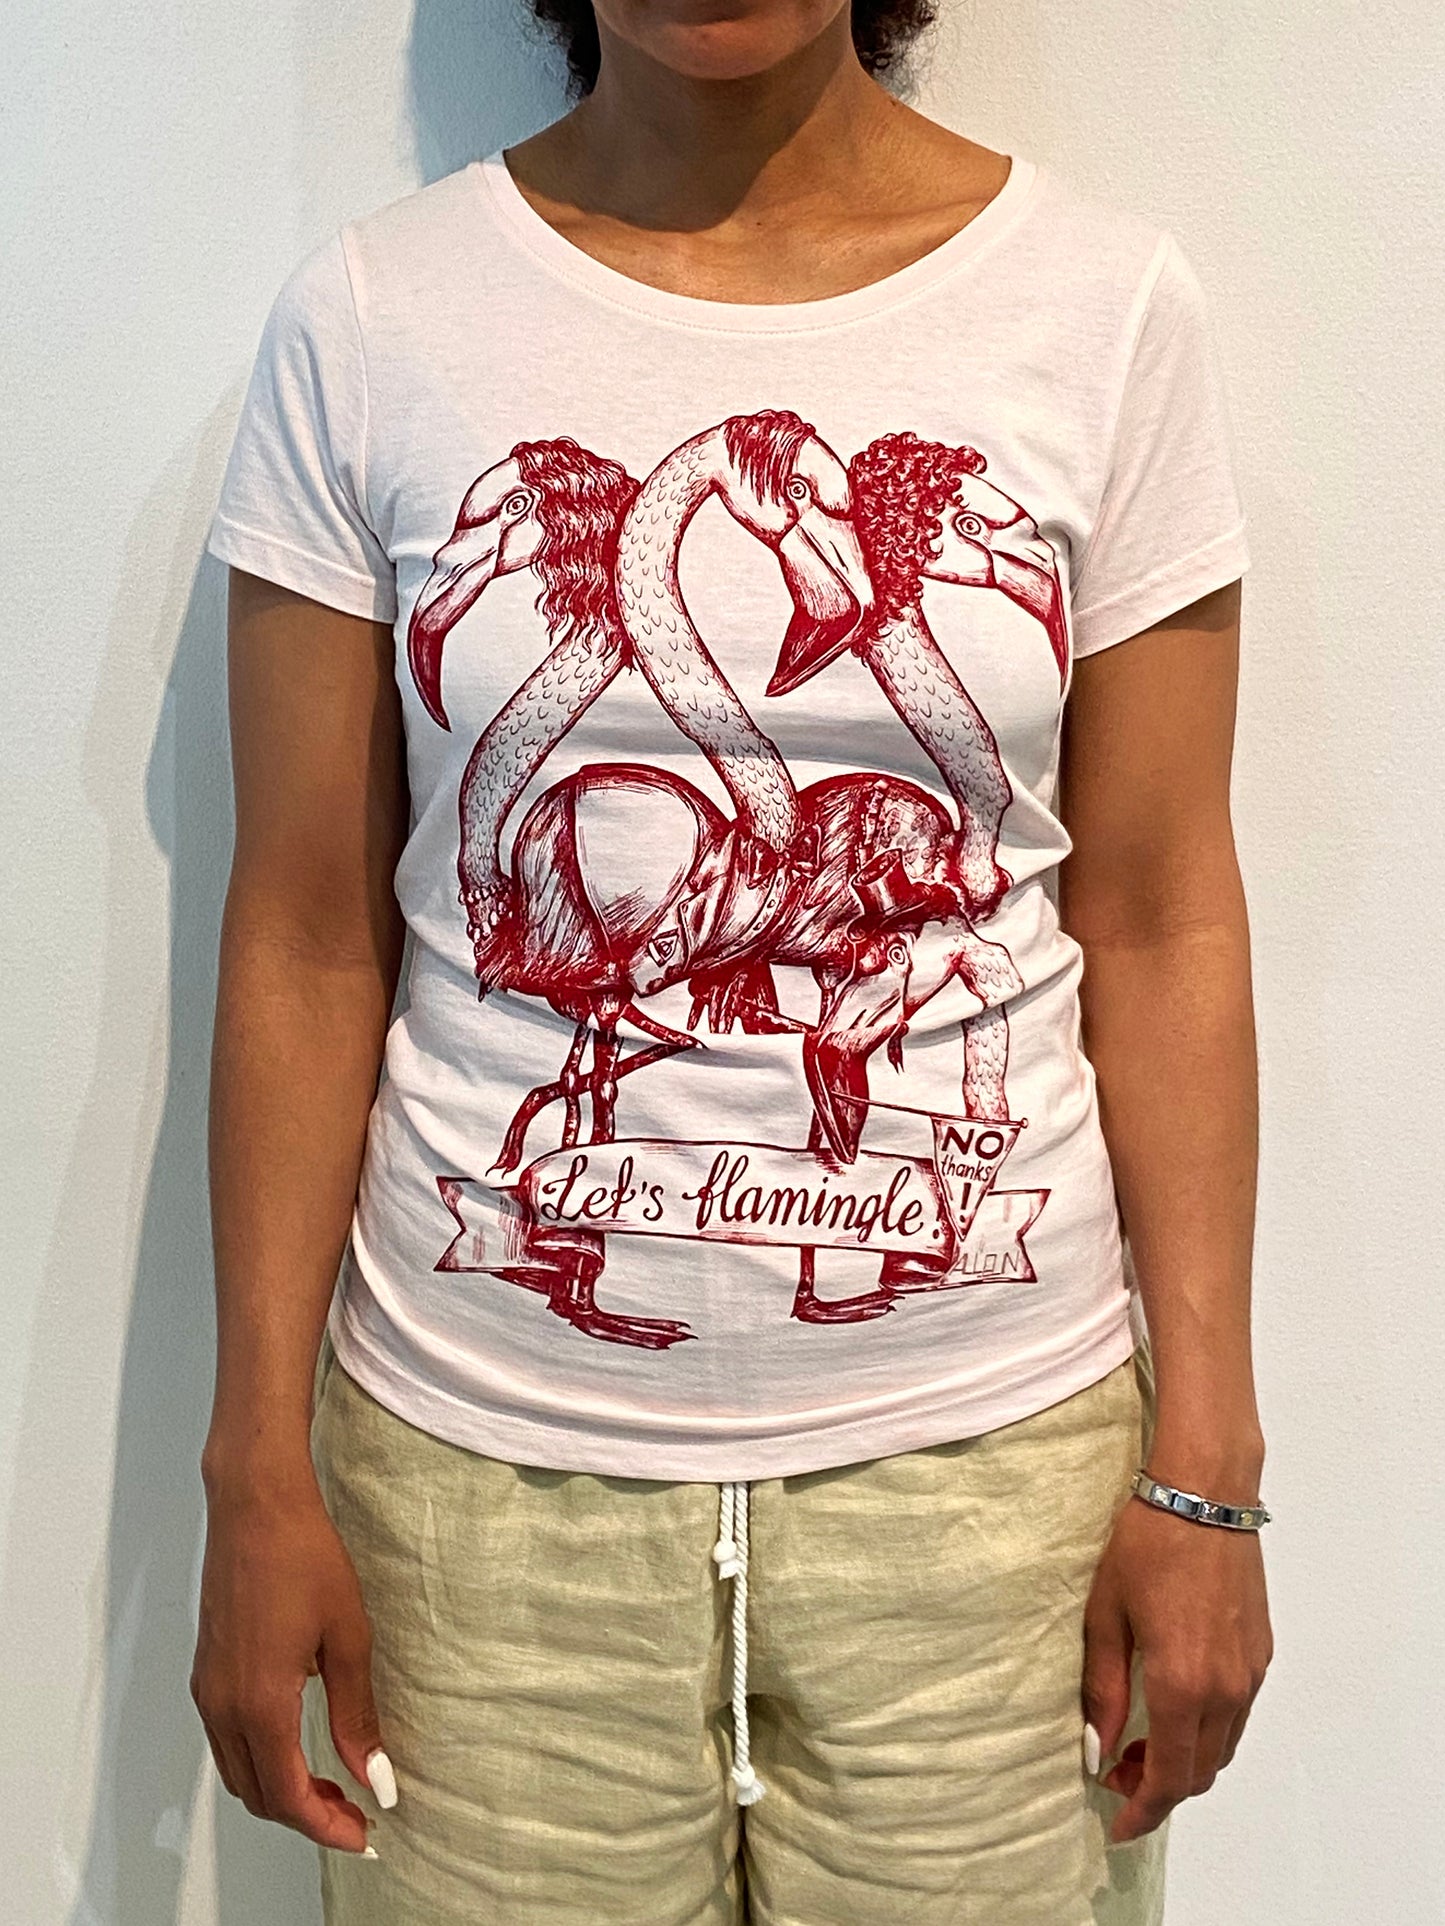 T-shirt: Flamingle